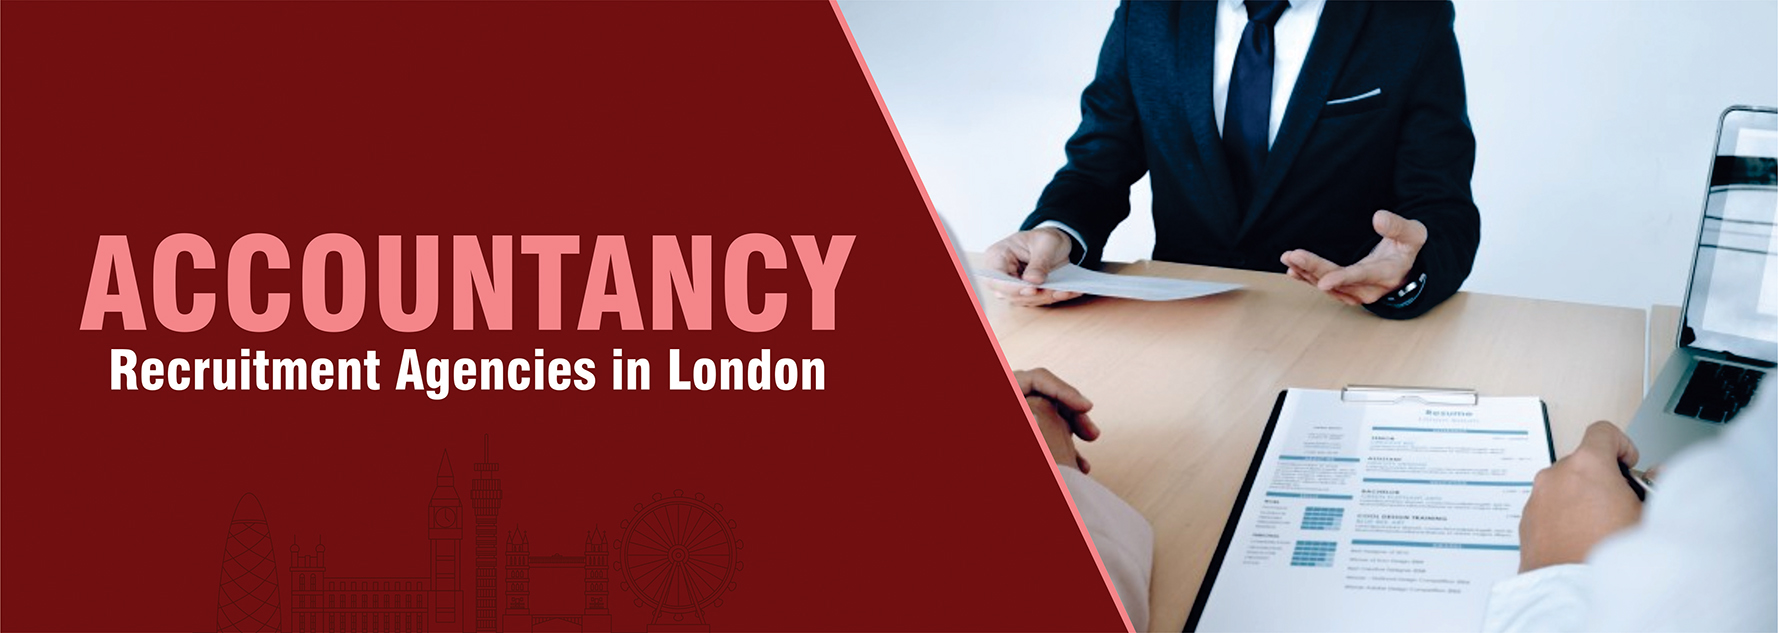 accountancy-recruitment-agencies-london